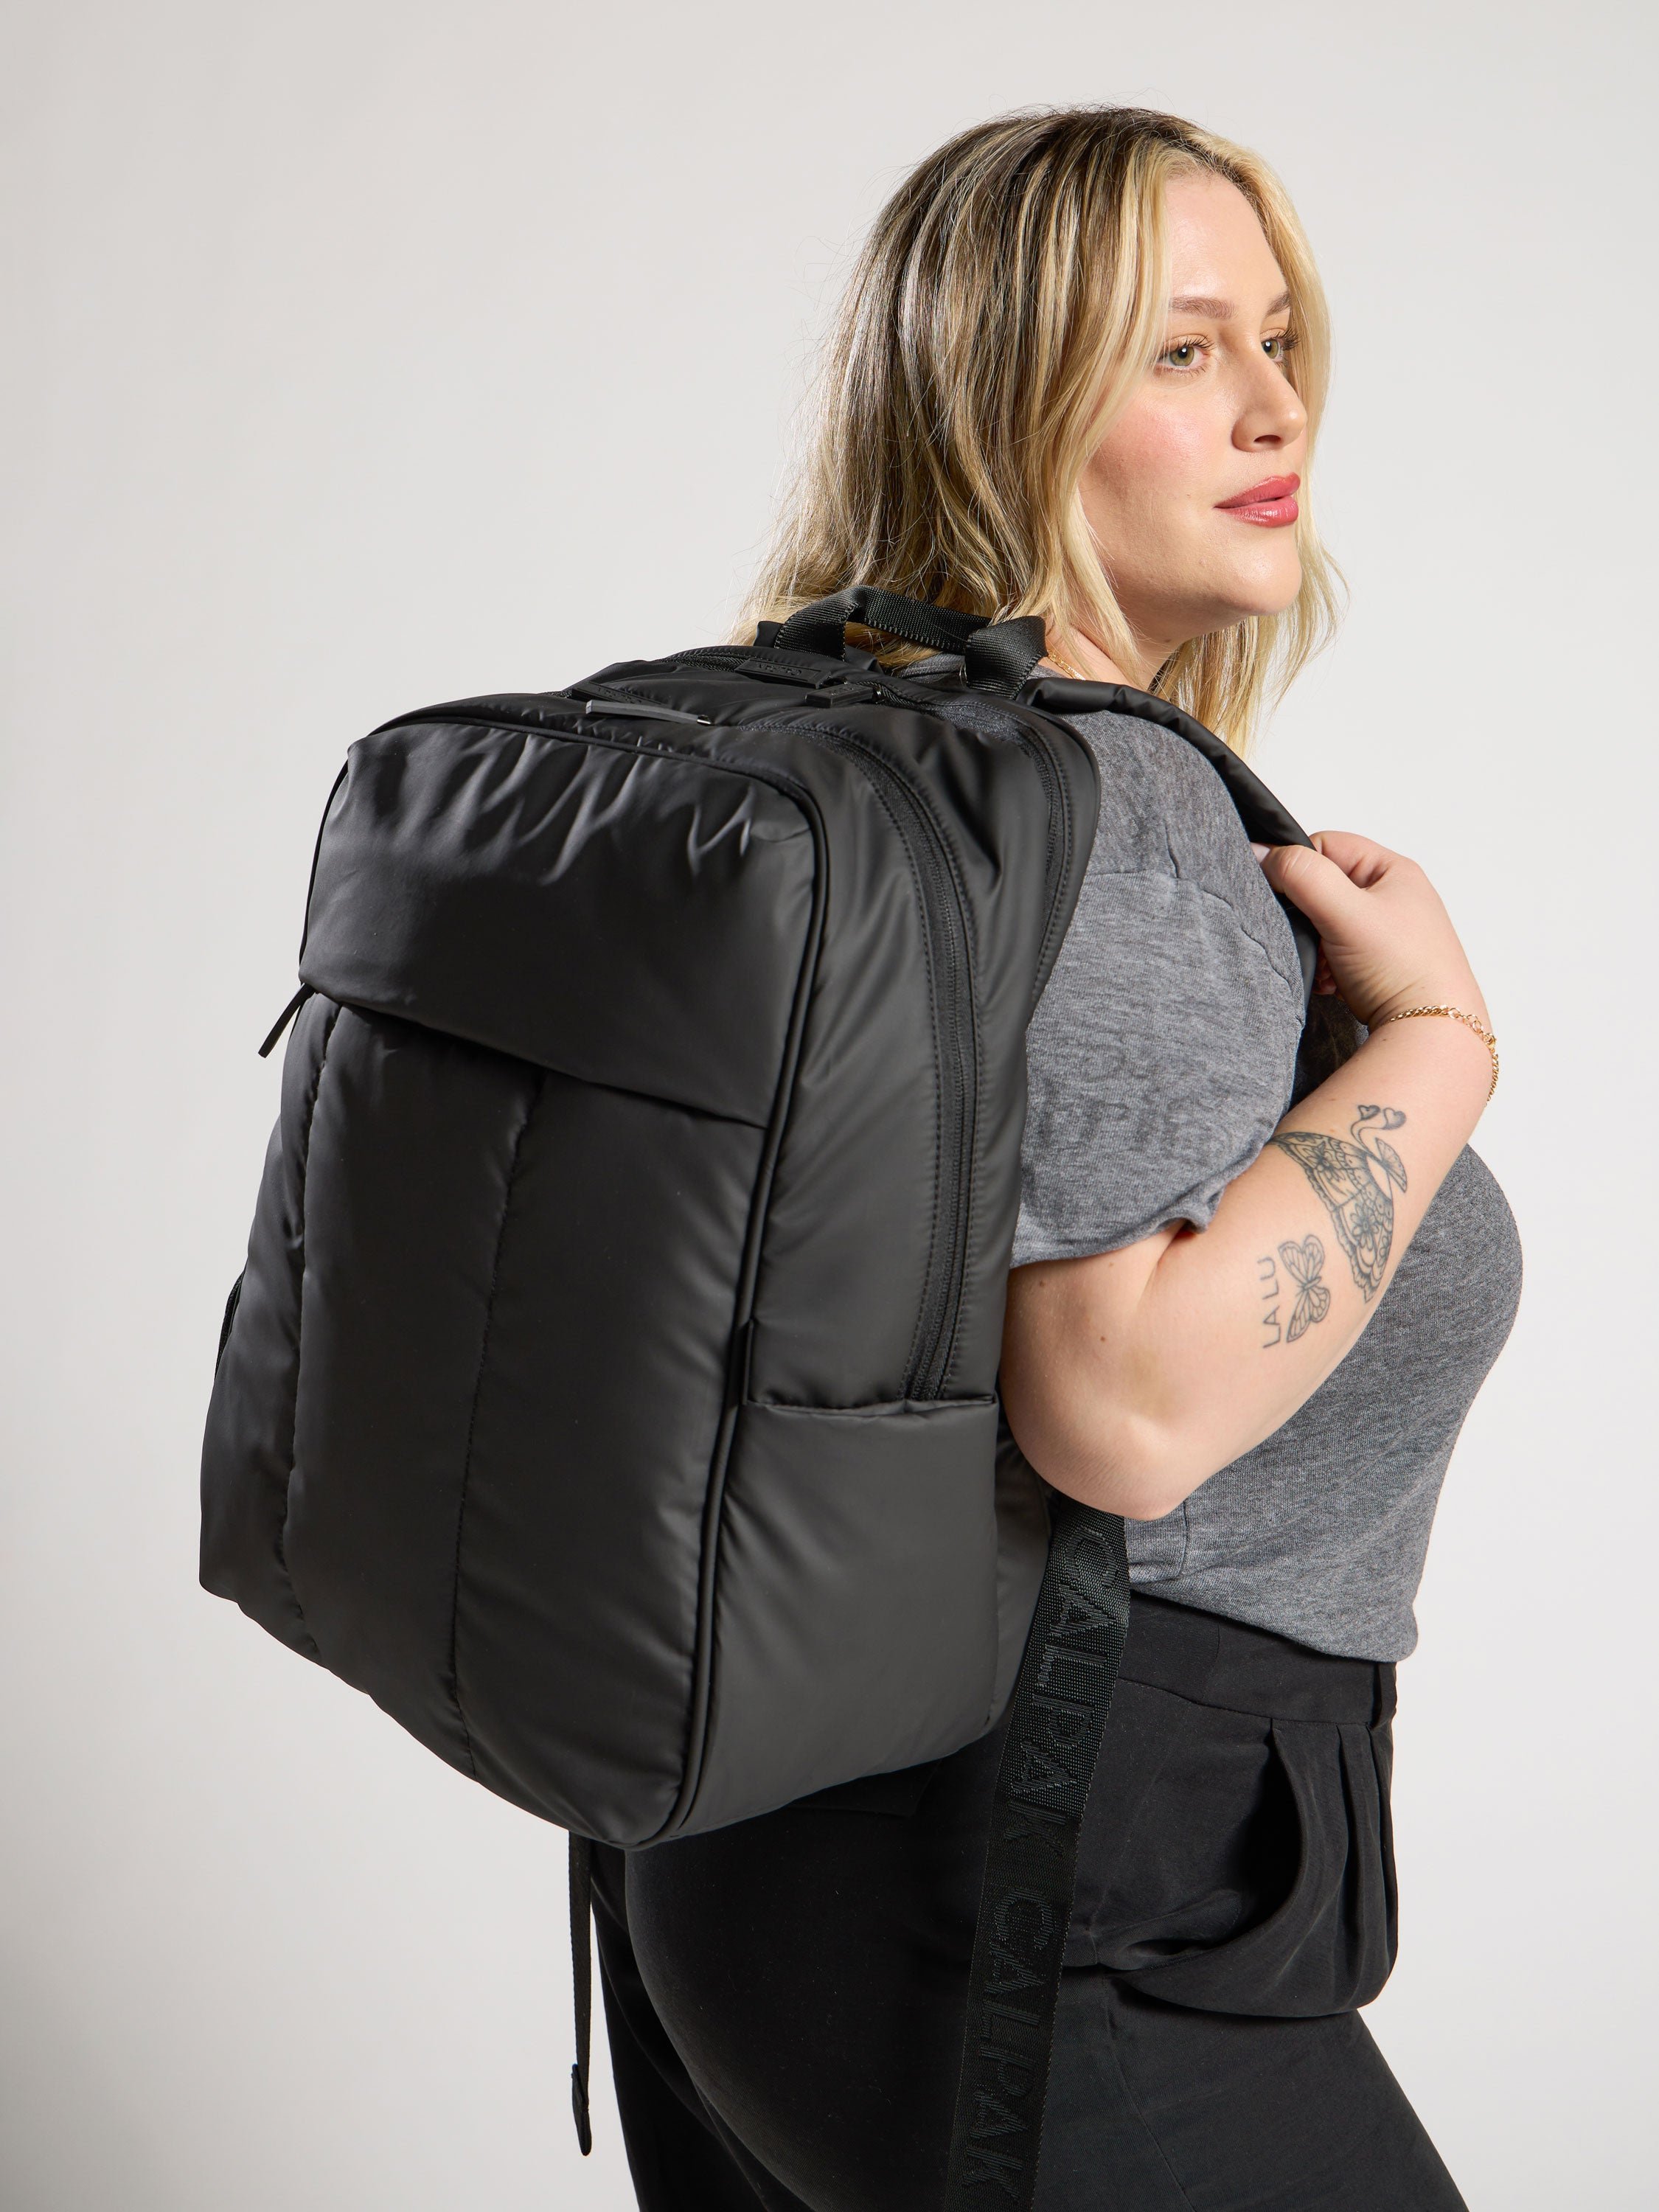 Model wearing luka laptop backpack for 17 inch laptop in black